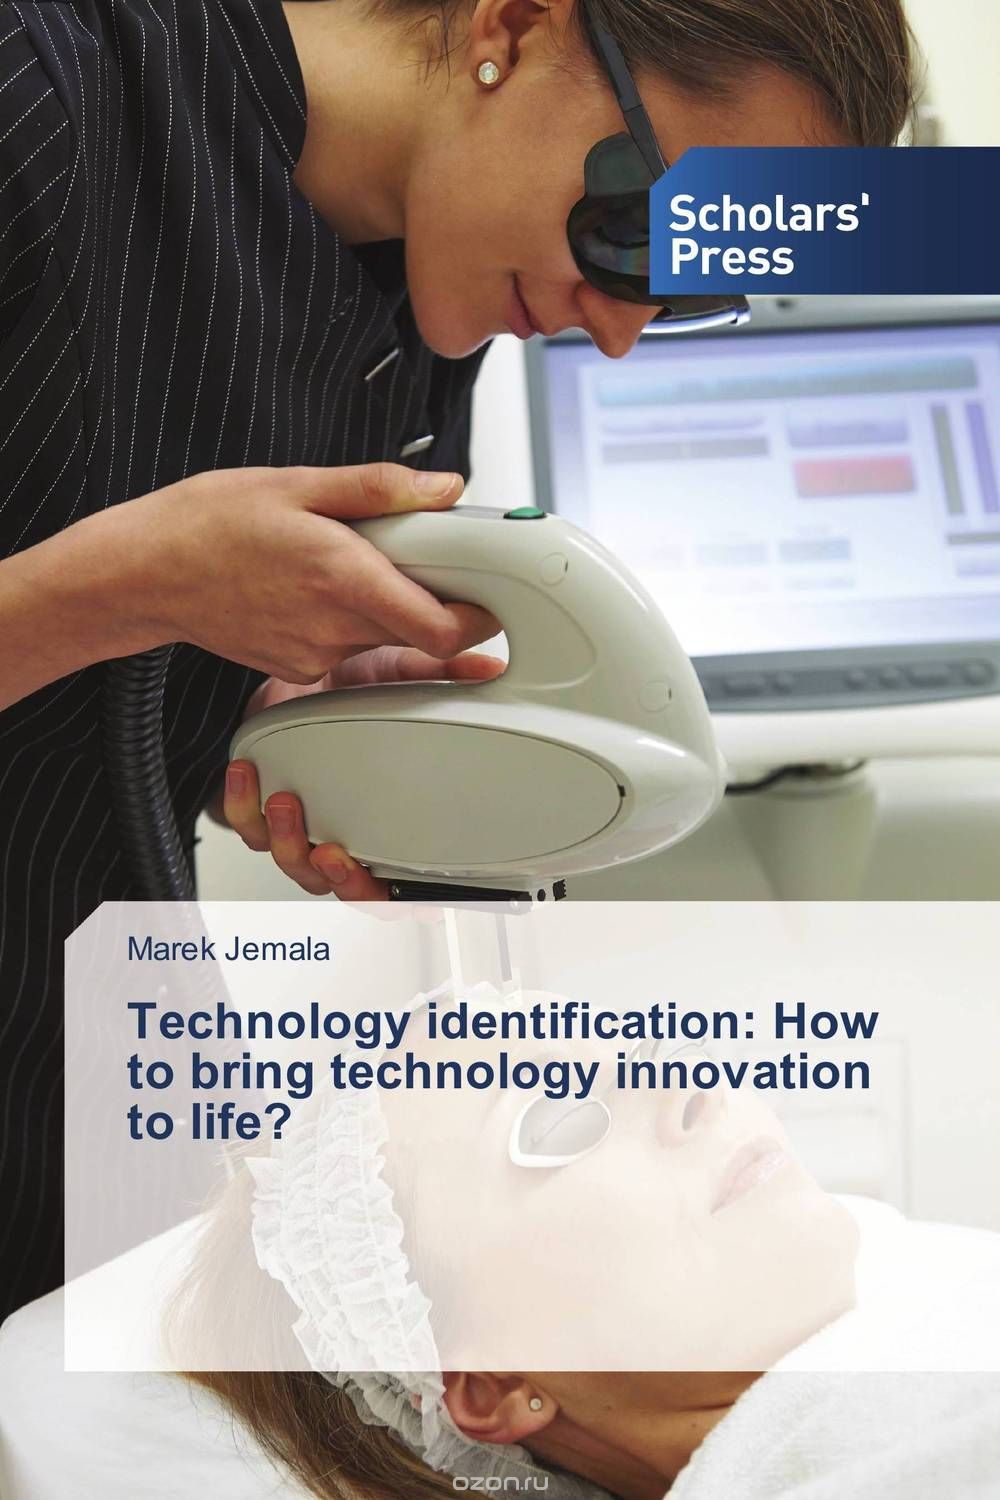 Скачать книгу "Technology identification: How to bring technology innovation to life?"